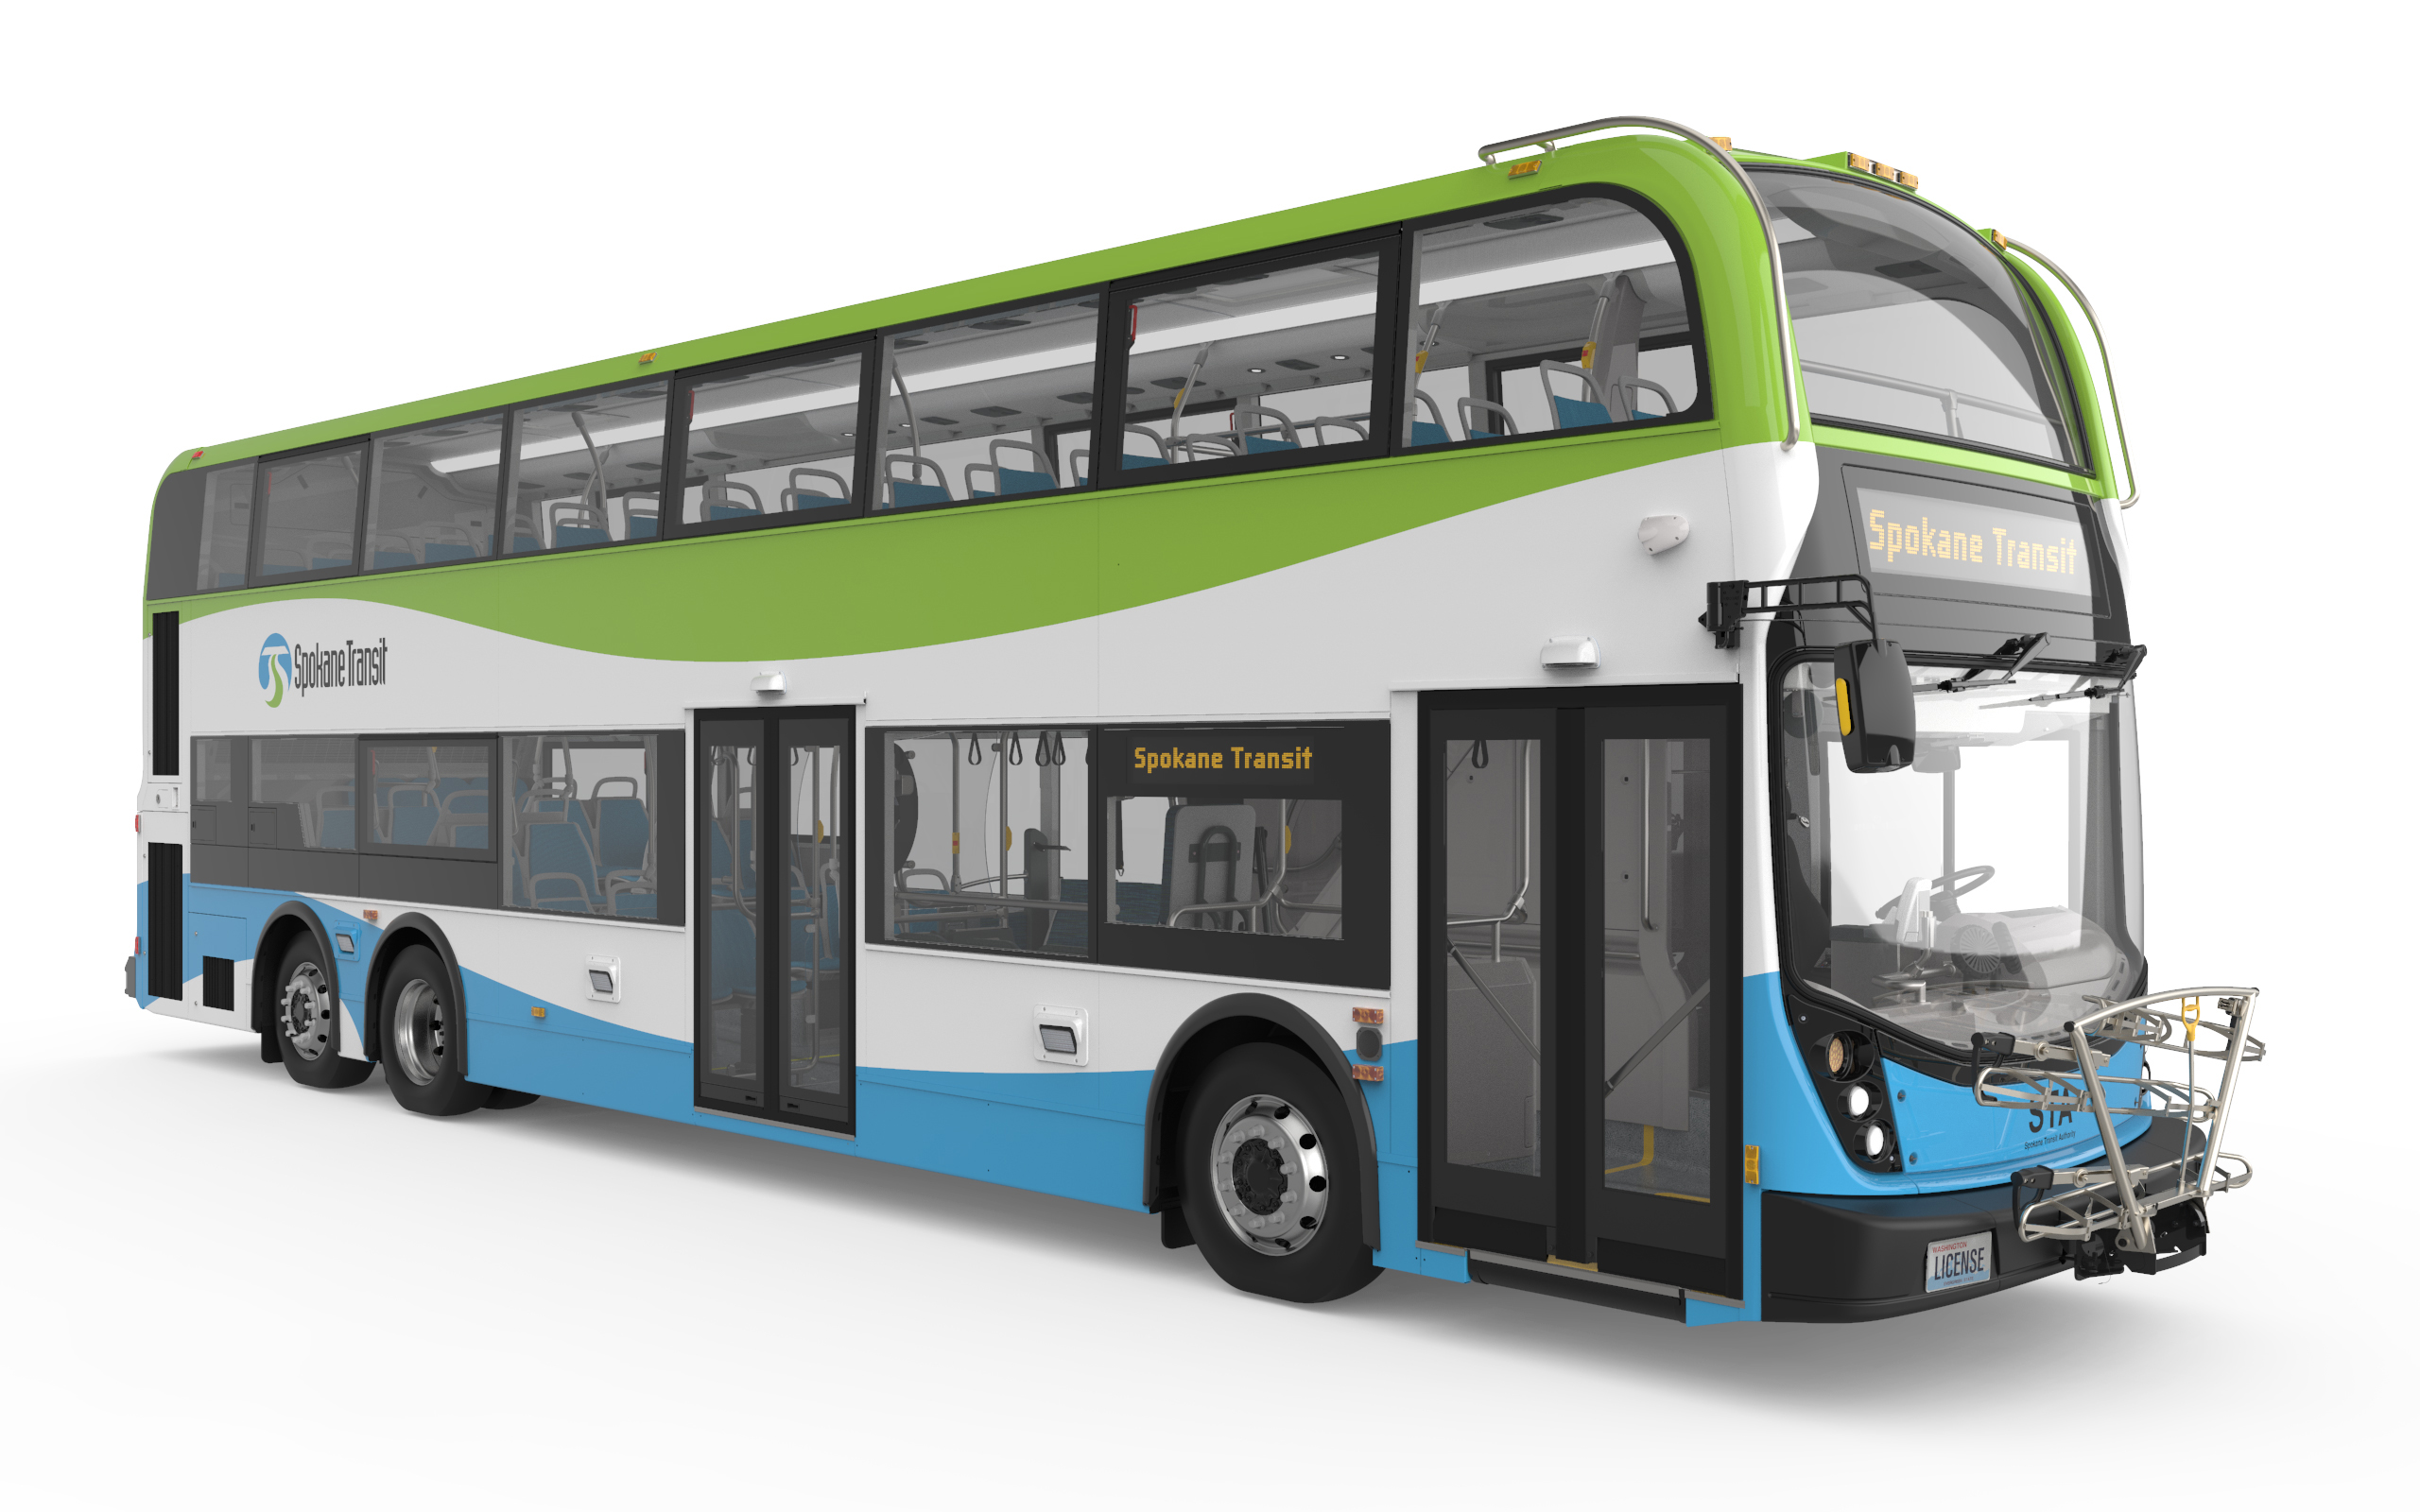 NFI announces first order for Alexander Dennis double-decks from Spokane Transit, for 7 Enviro500 buses